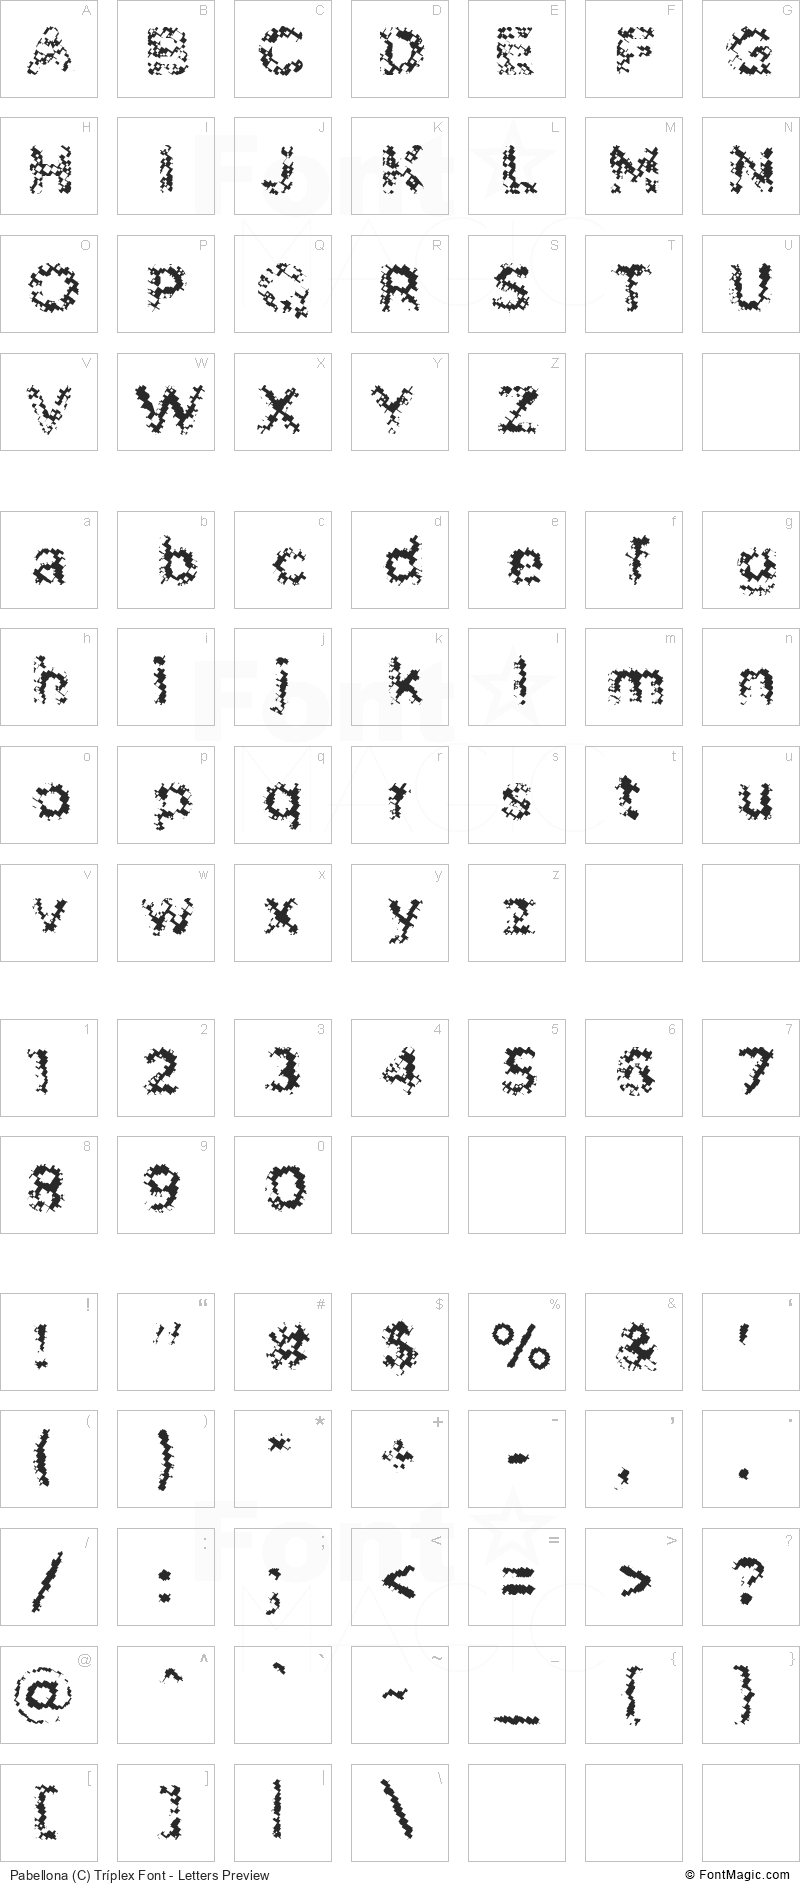 Pabellona (C) Tríplex Font - All Latters Preview Chart